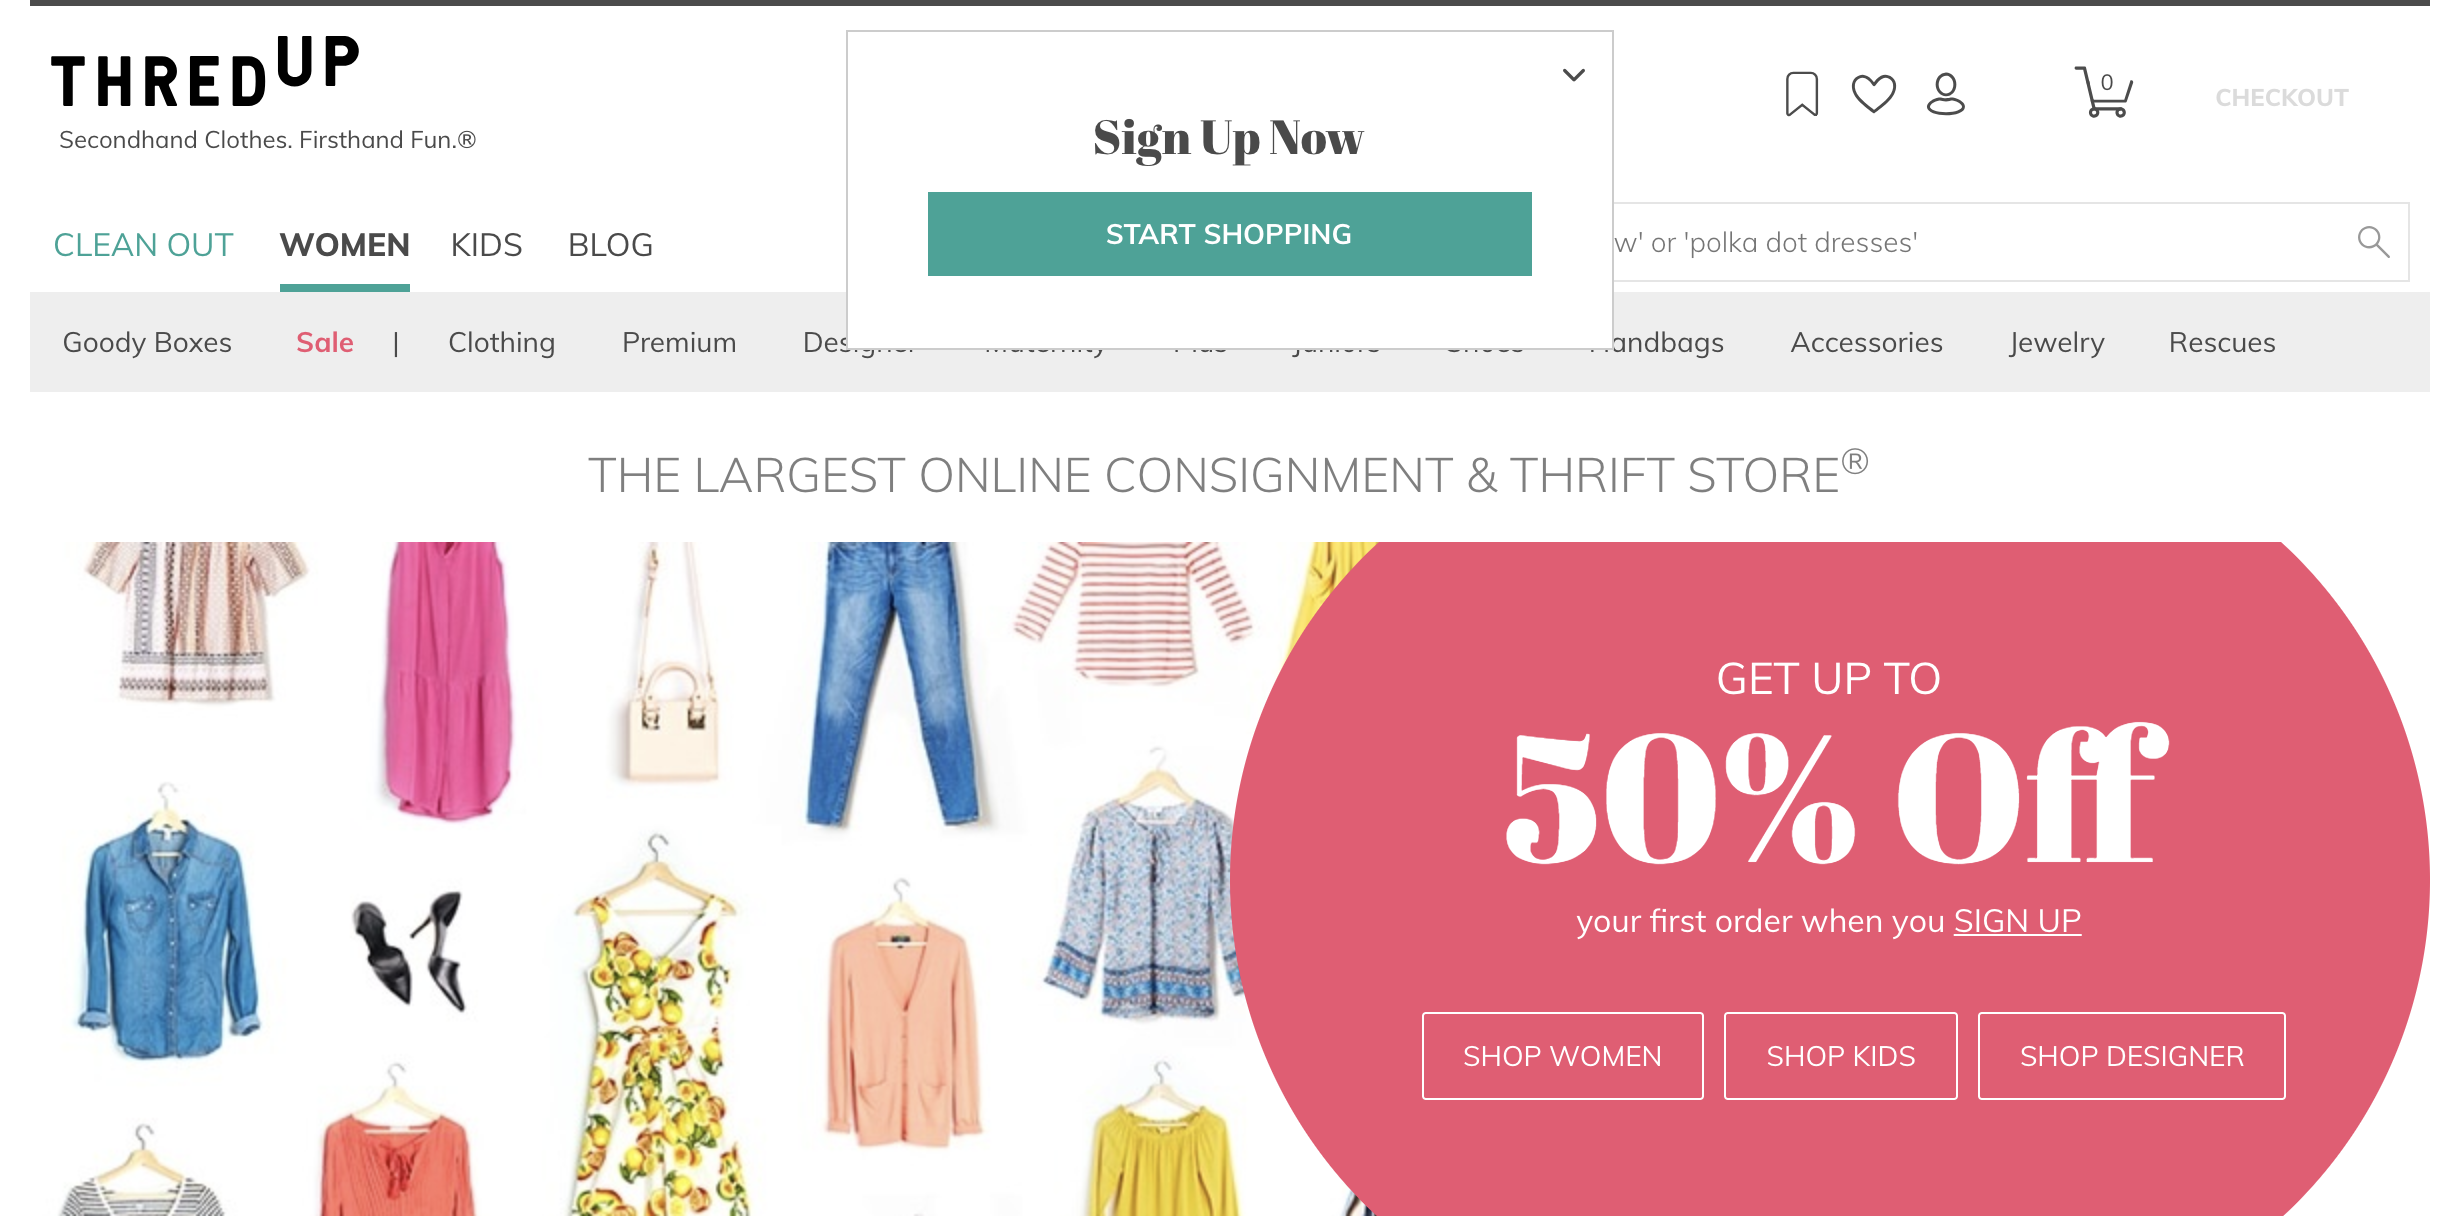 websites to get cheap designer clothes